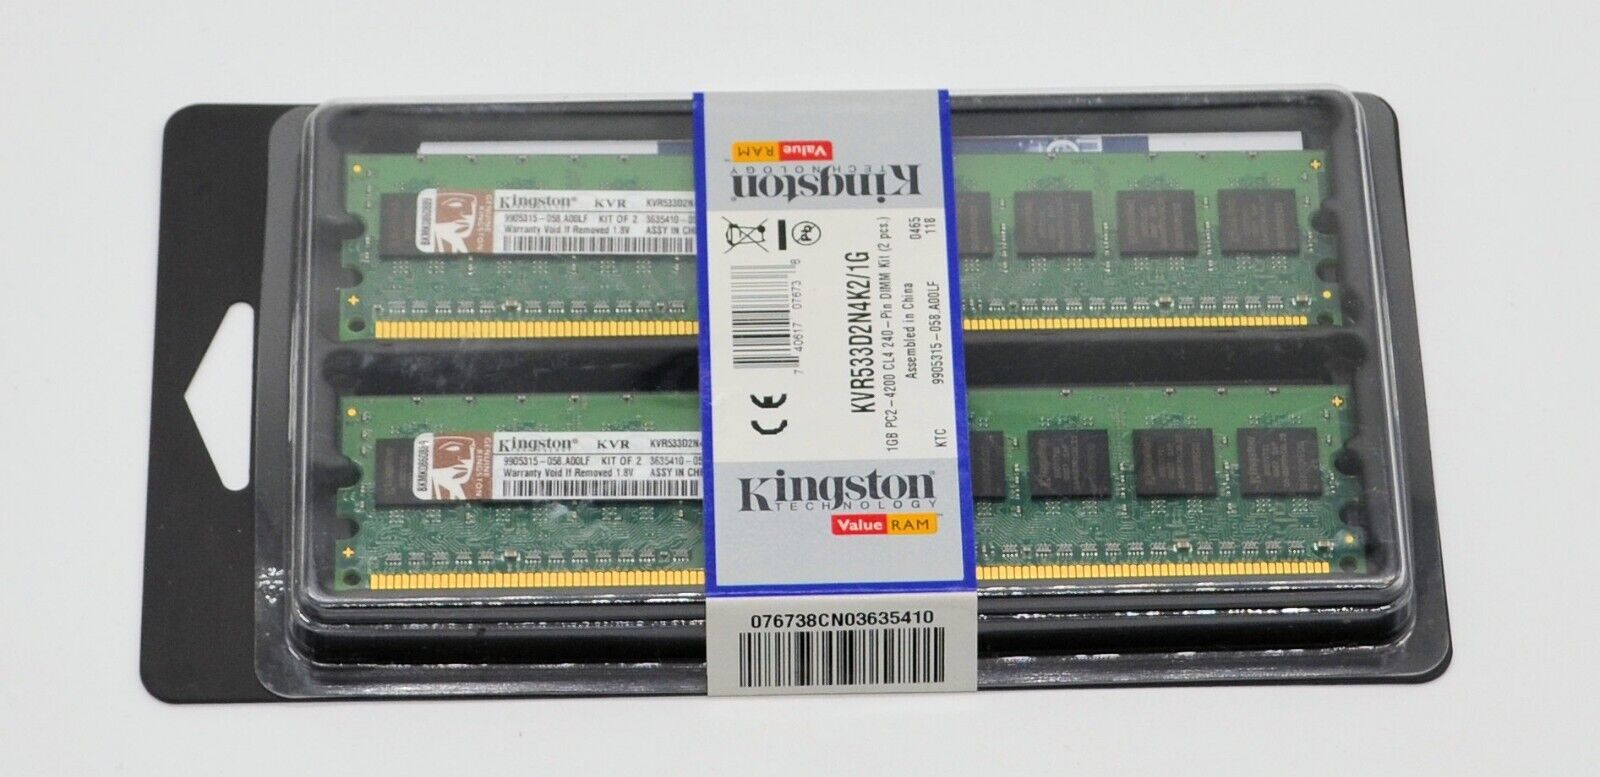 Kingston DDR2-533 KVR533D2N4K2/1G  Memory Kit Brand New x 2 Bundle D-01